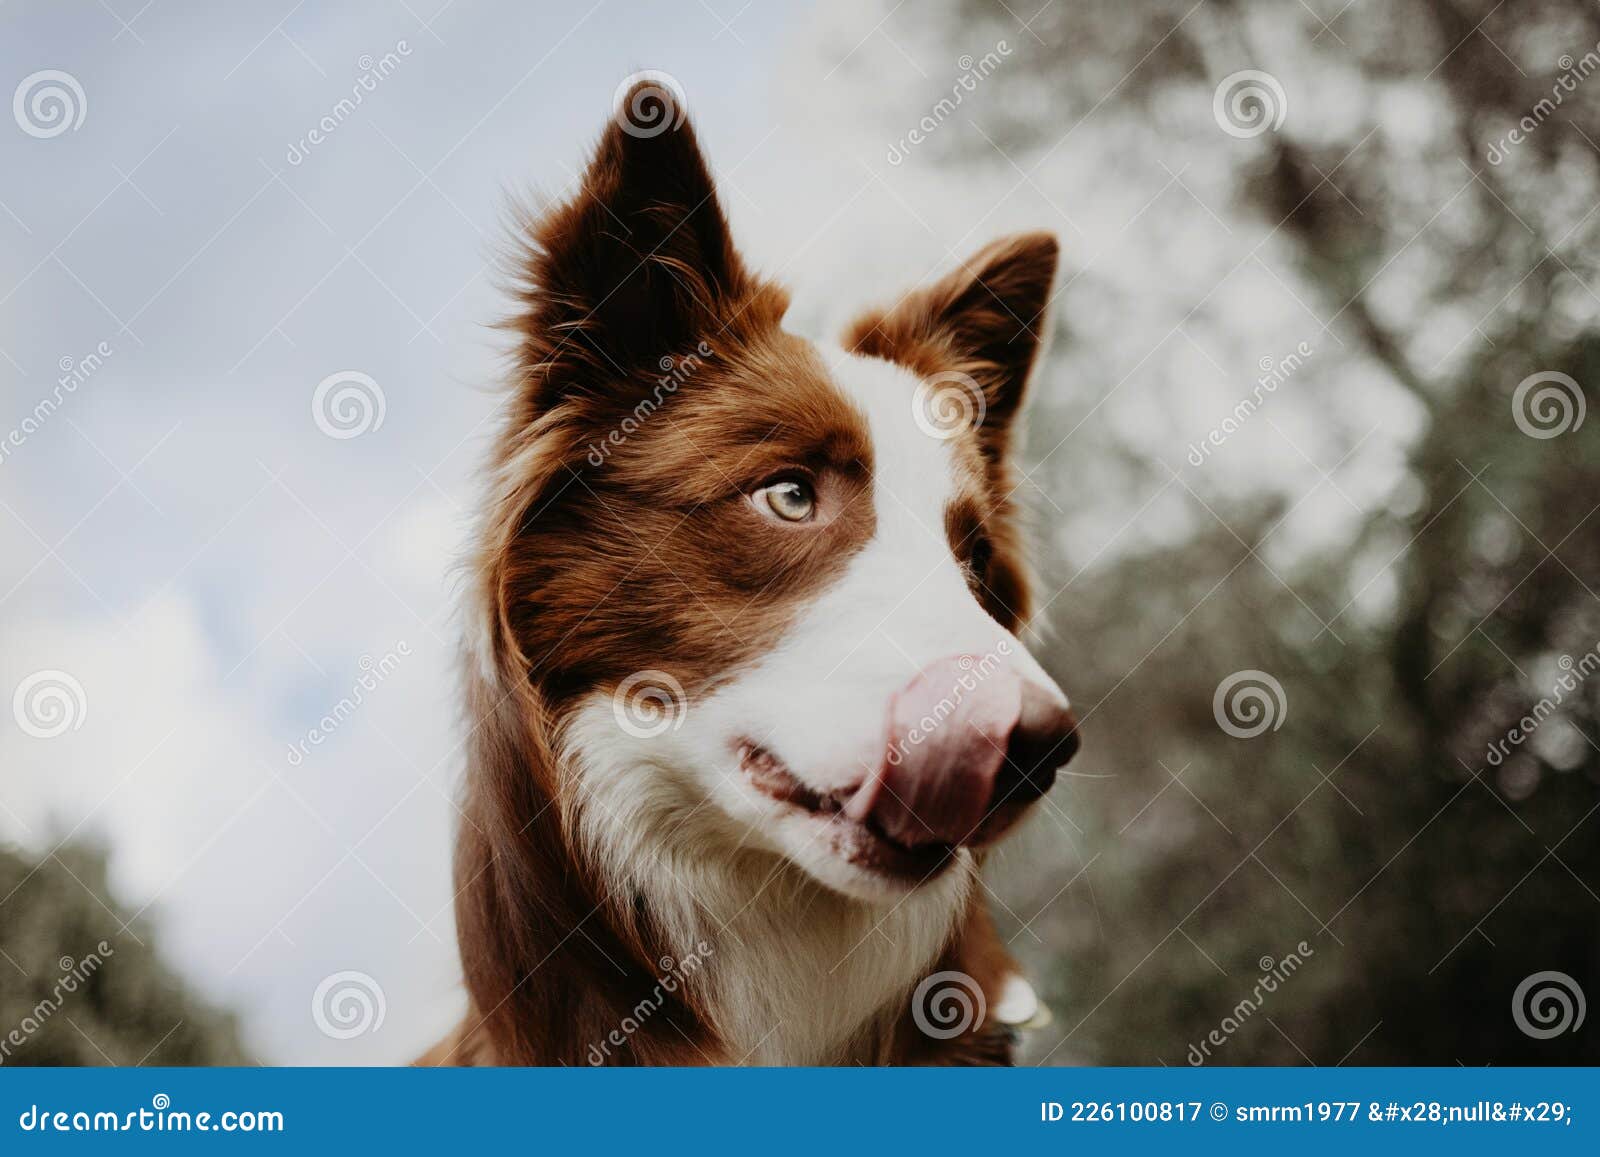 portrait border collie dog licking its kips on sky background